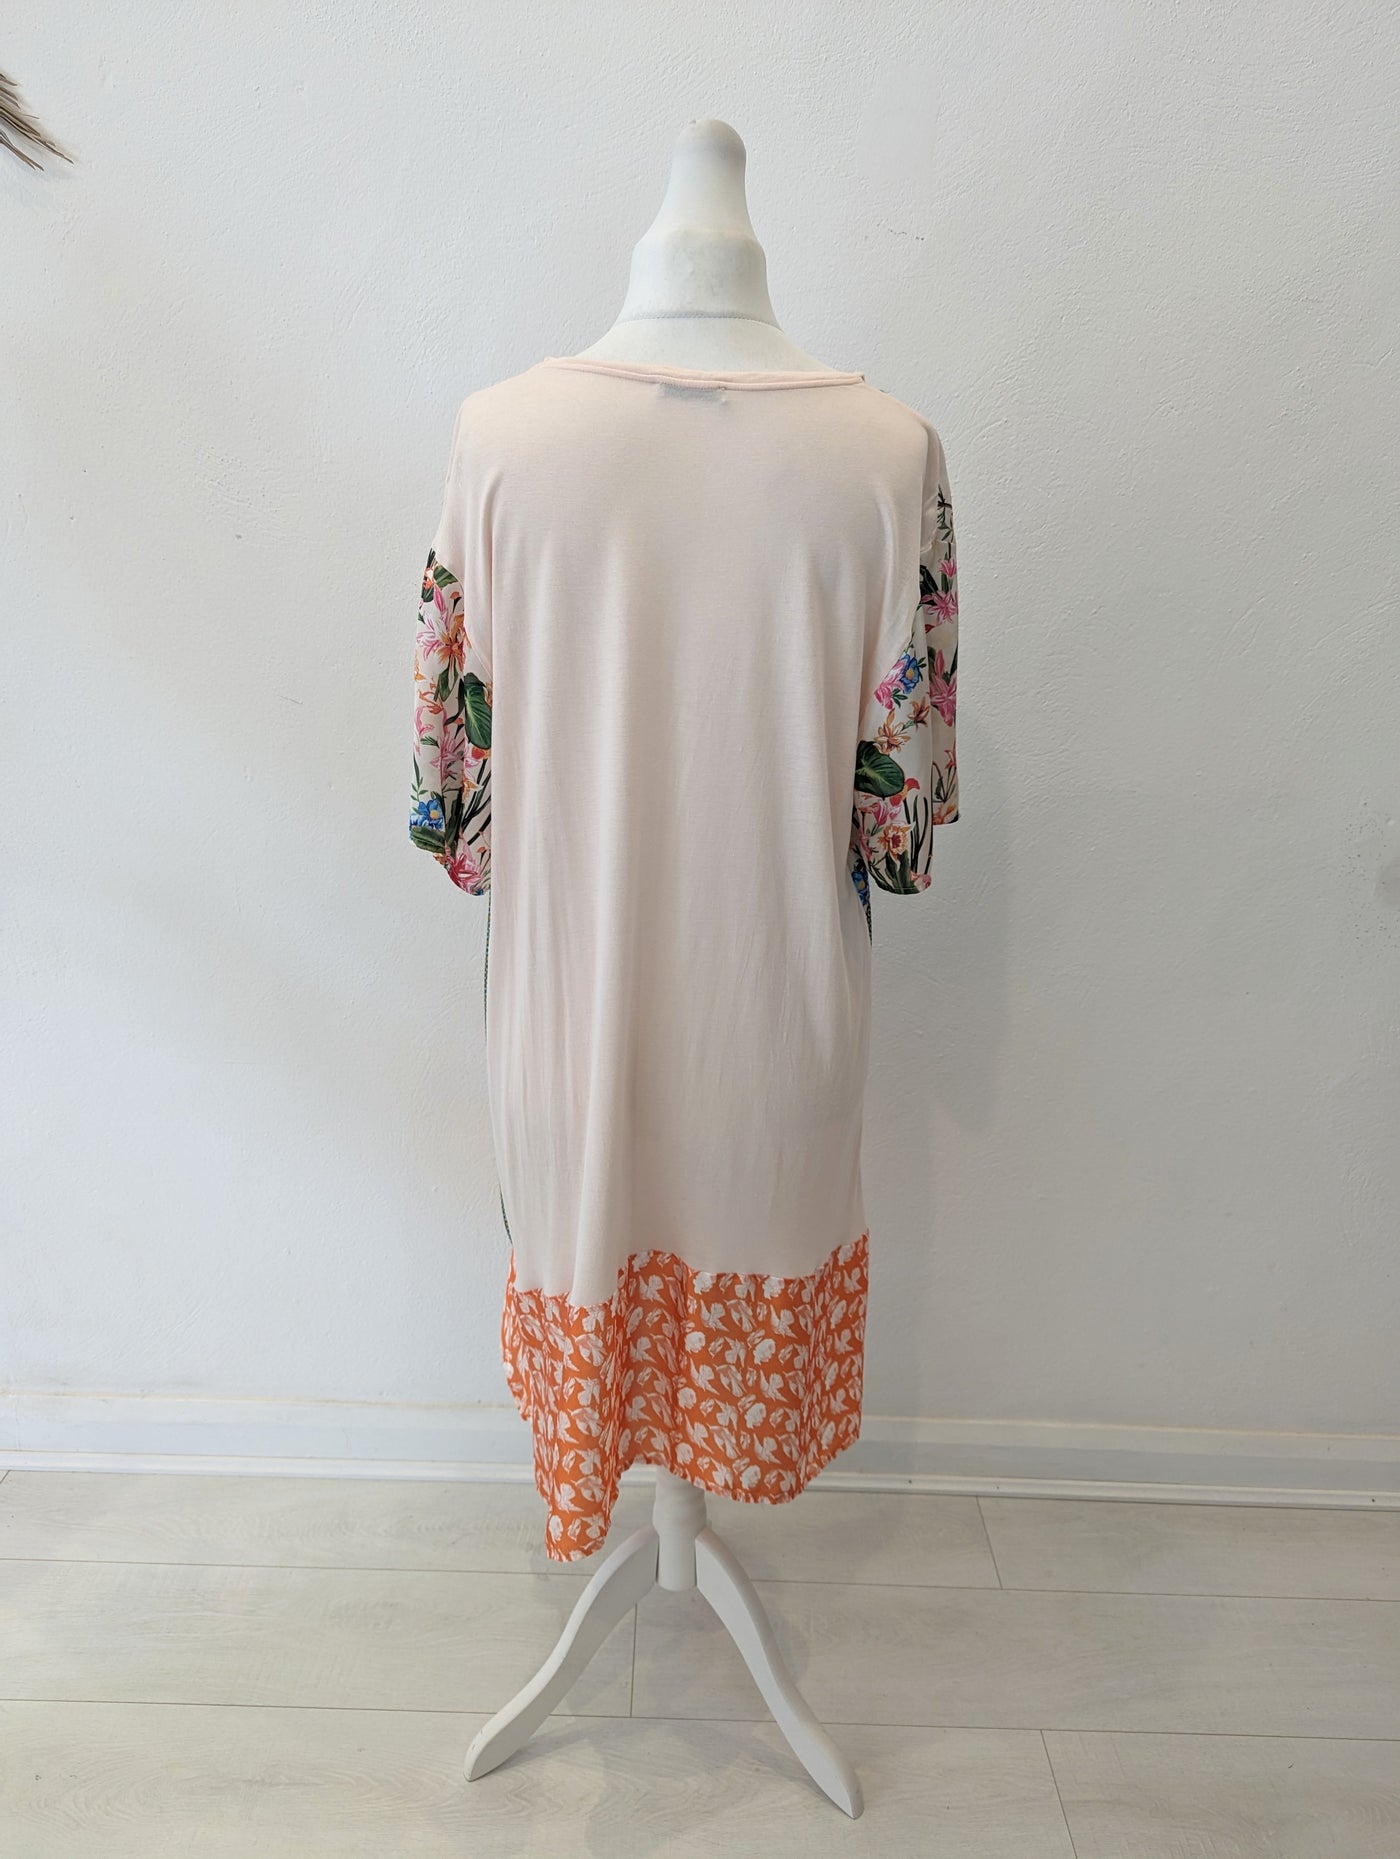 Zara Peach/green floral dress XL